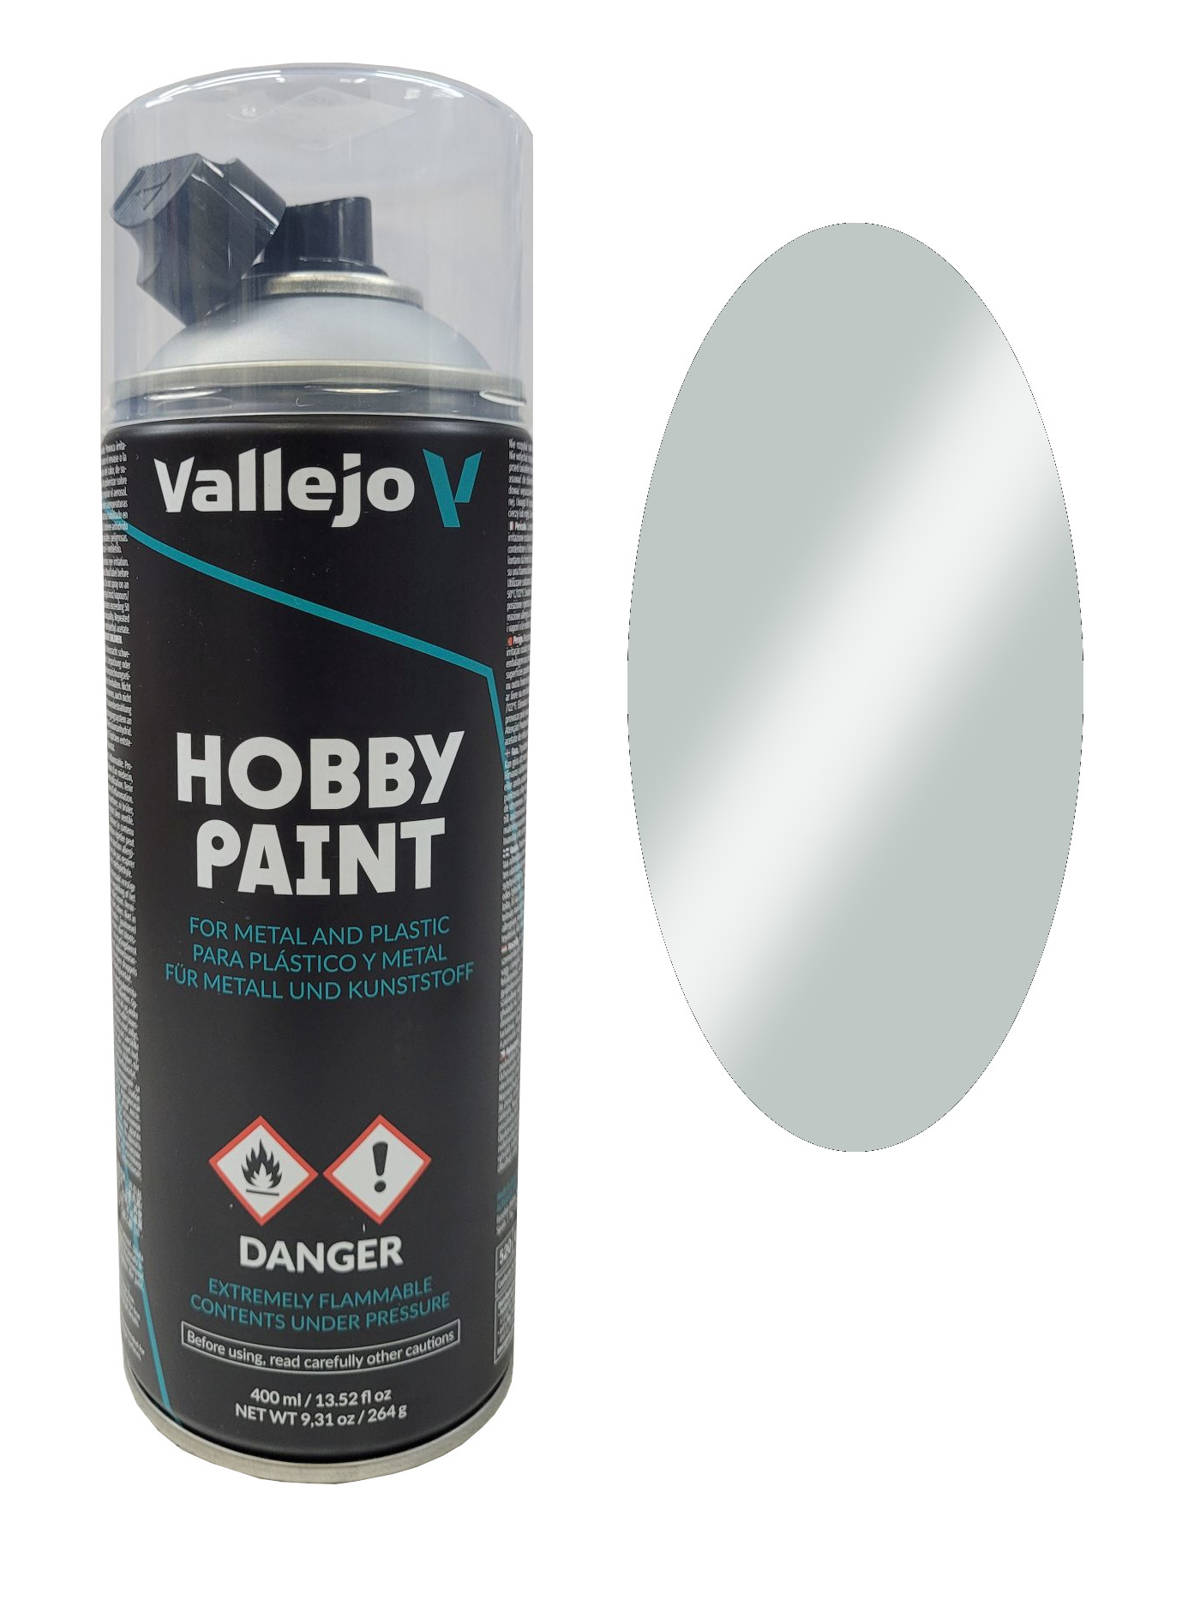 Vallejo paint spray - 28.011 Grey